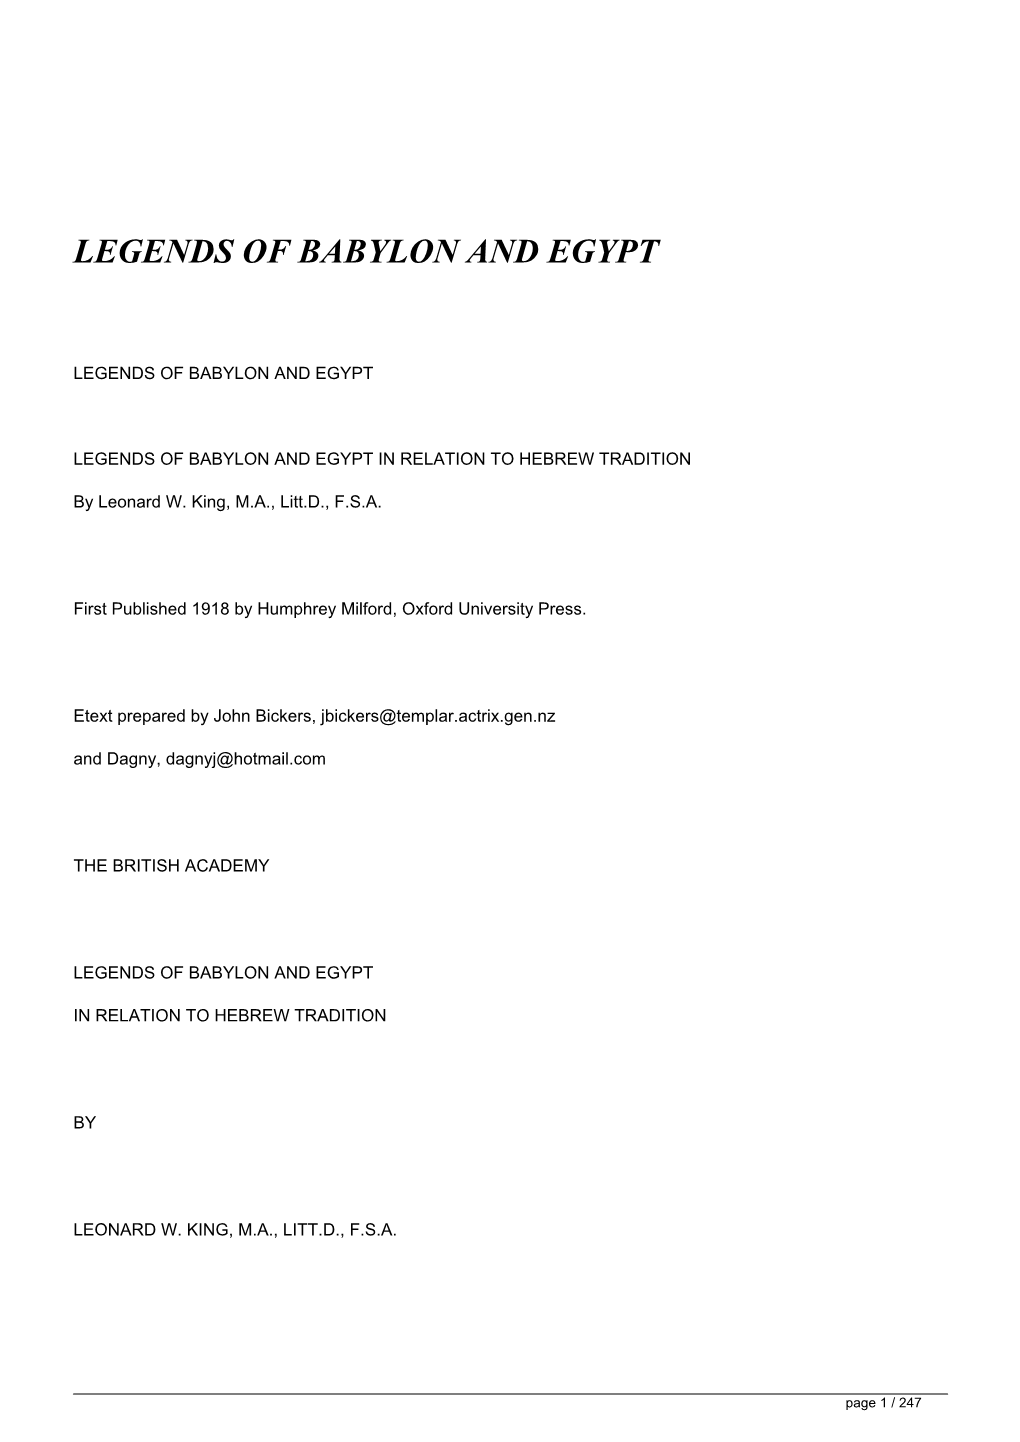 LEGENDS of BABYLON and EGYPT&lt;/H1&gt;